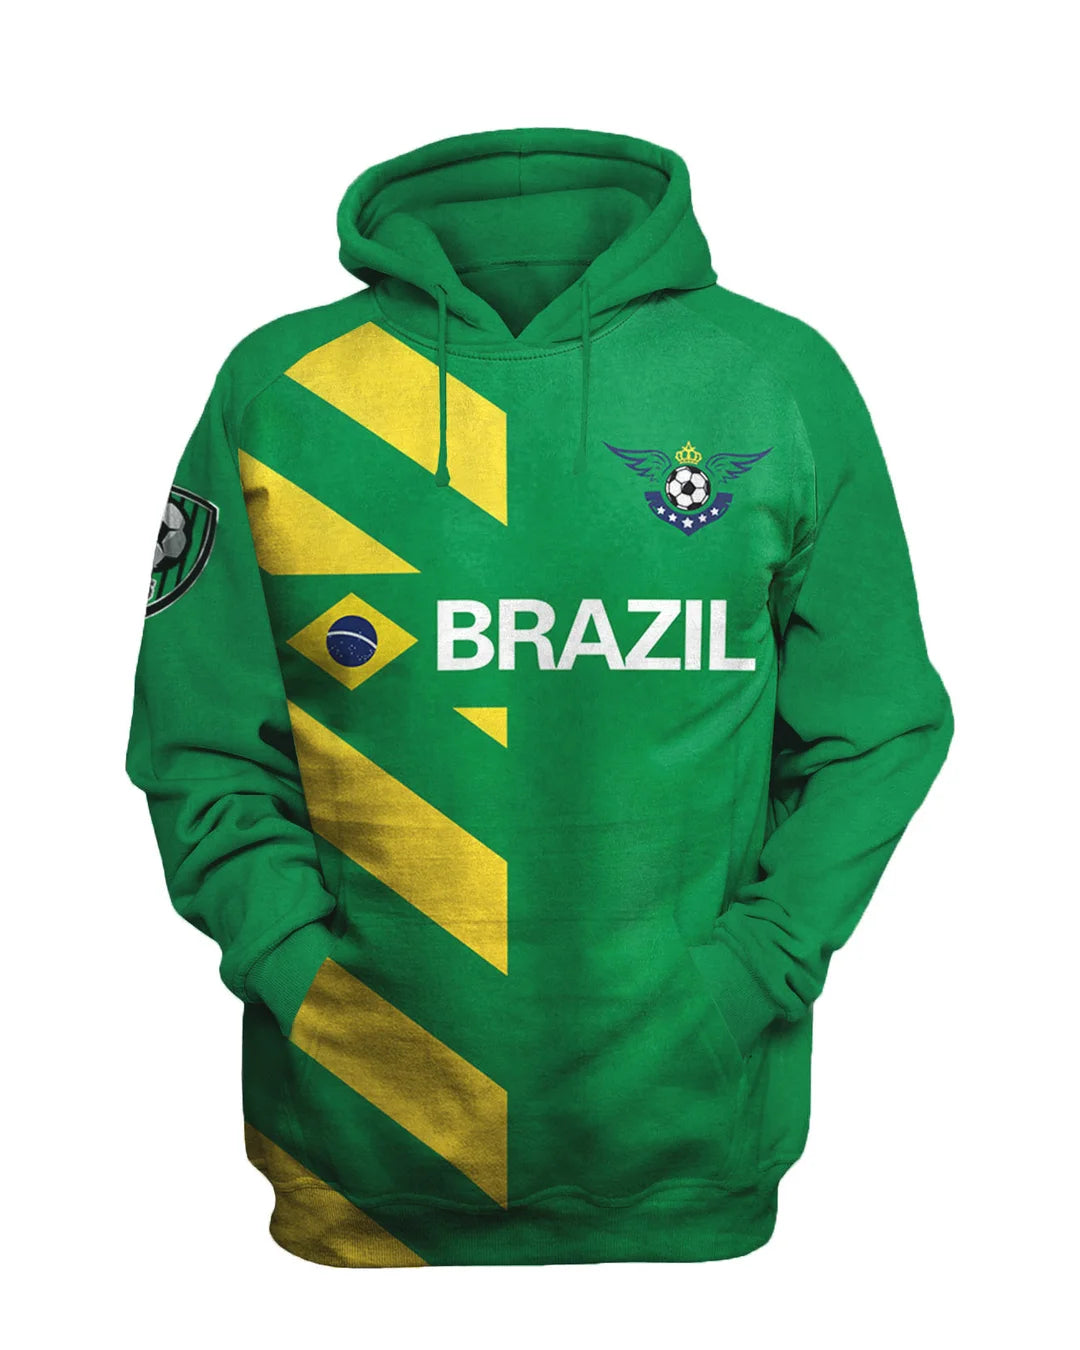 Brazil Team Sports Football Printed Sweatshirt Set - DUVAL